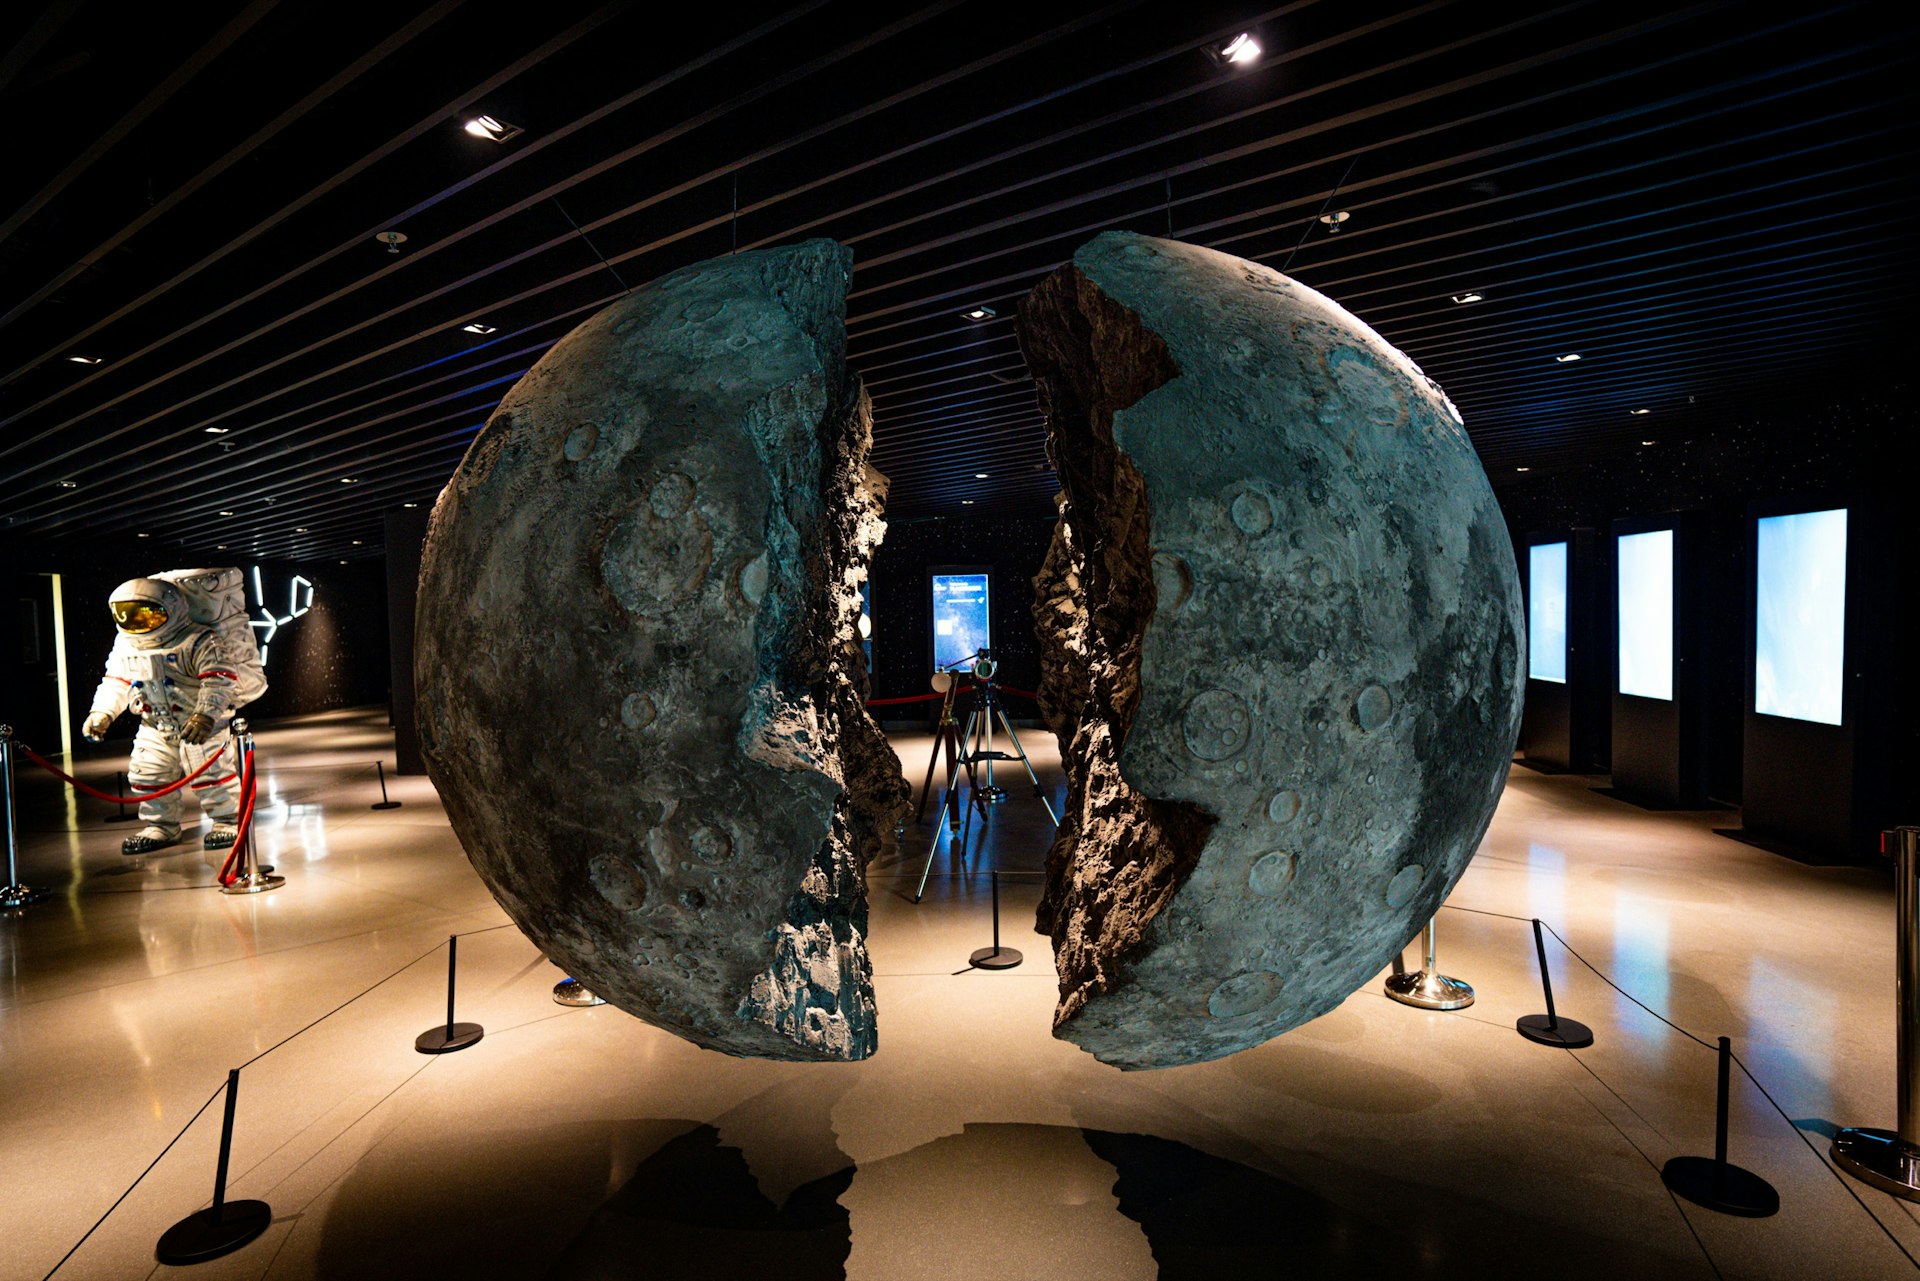 Qatar_Families_planetarium.jpg